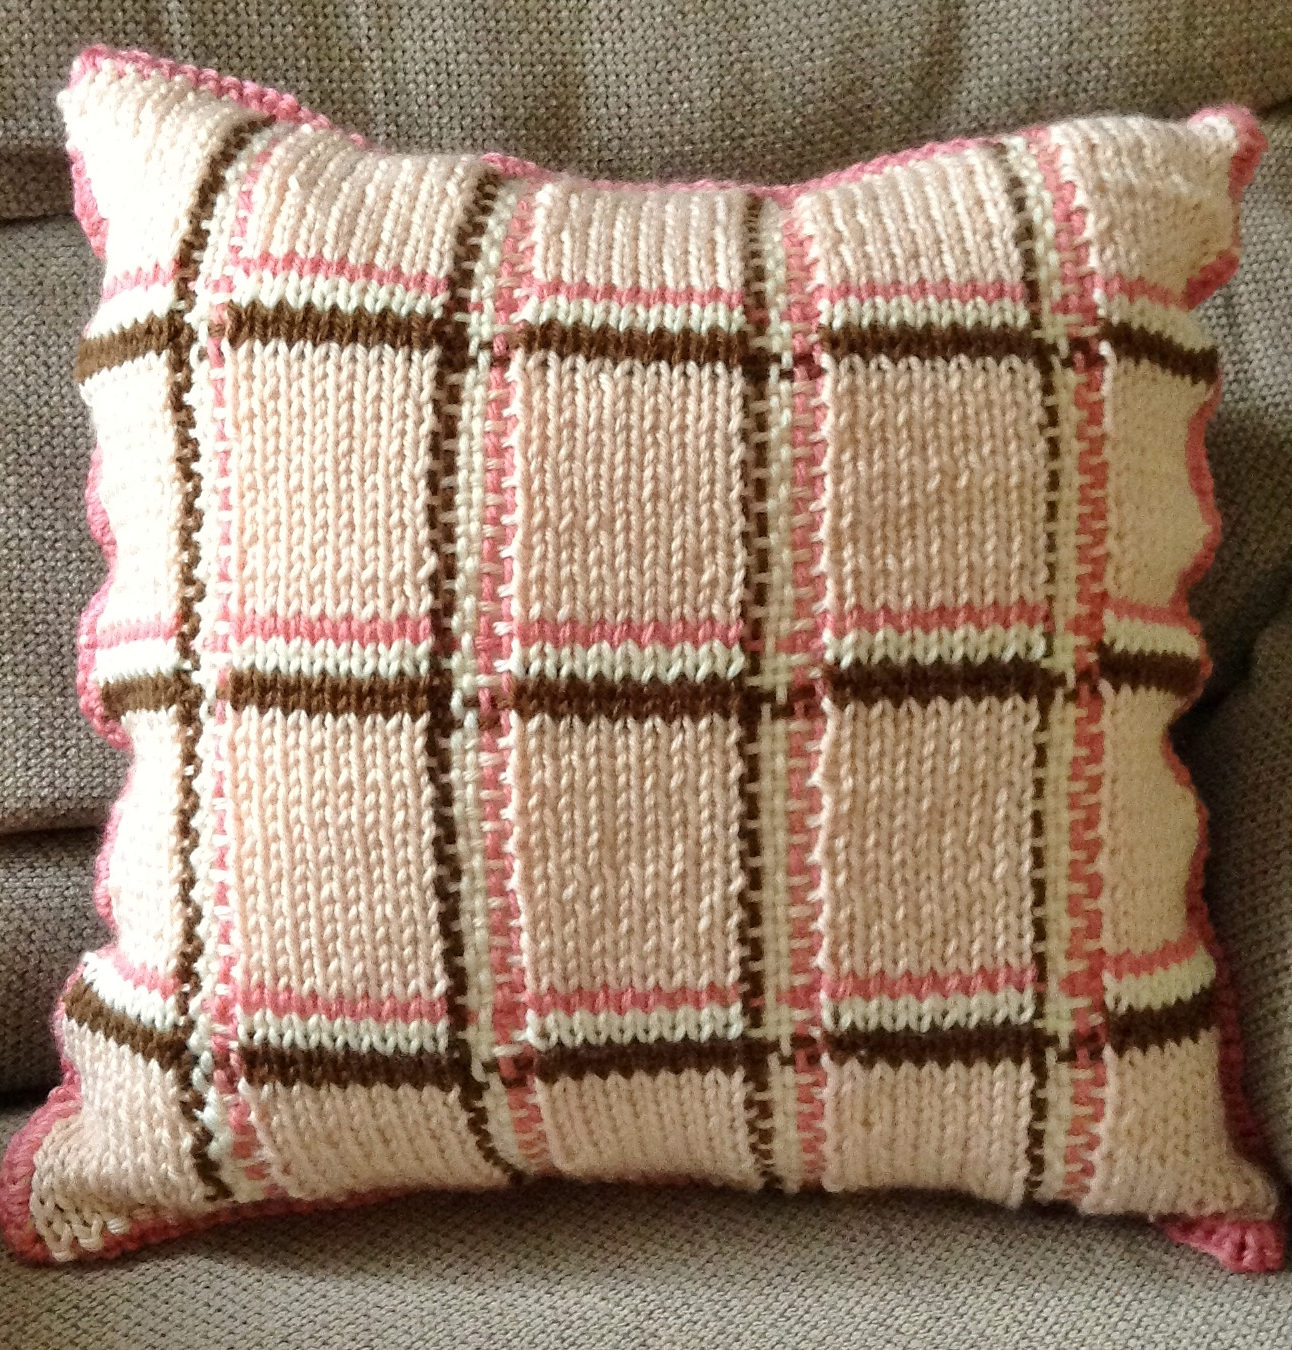 Free Cushion Knitting Patterns Plaid Knitting Patterns In The Loop Knitting